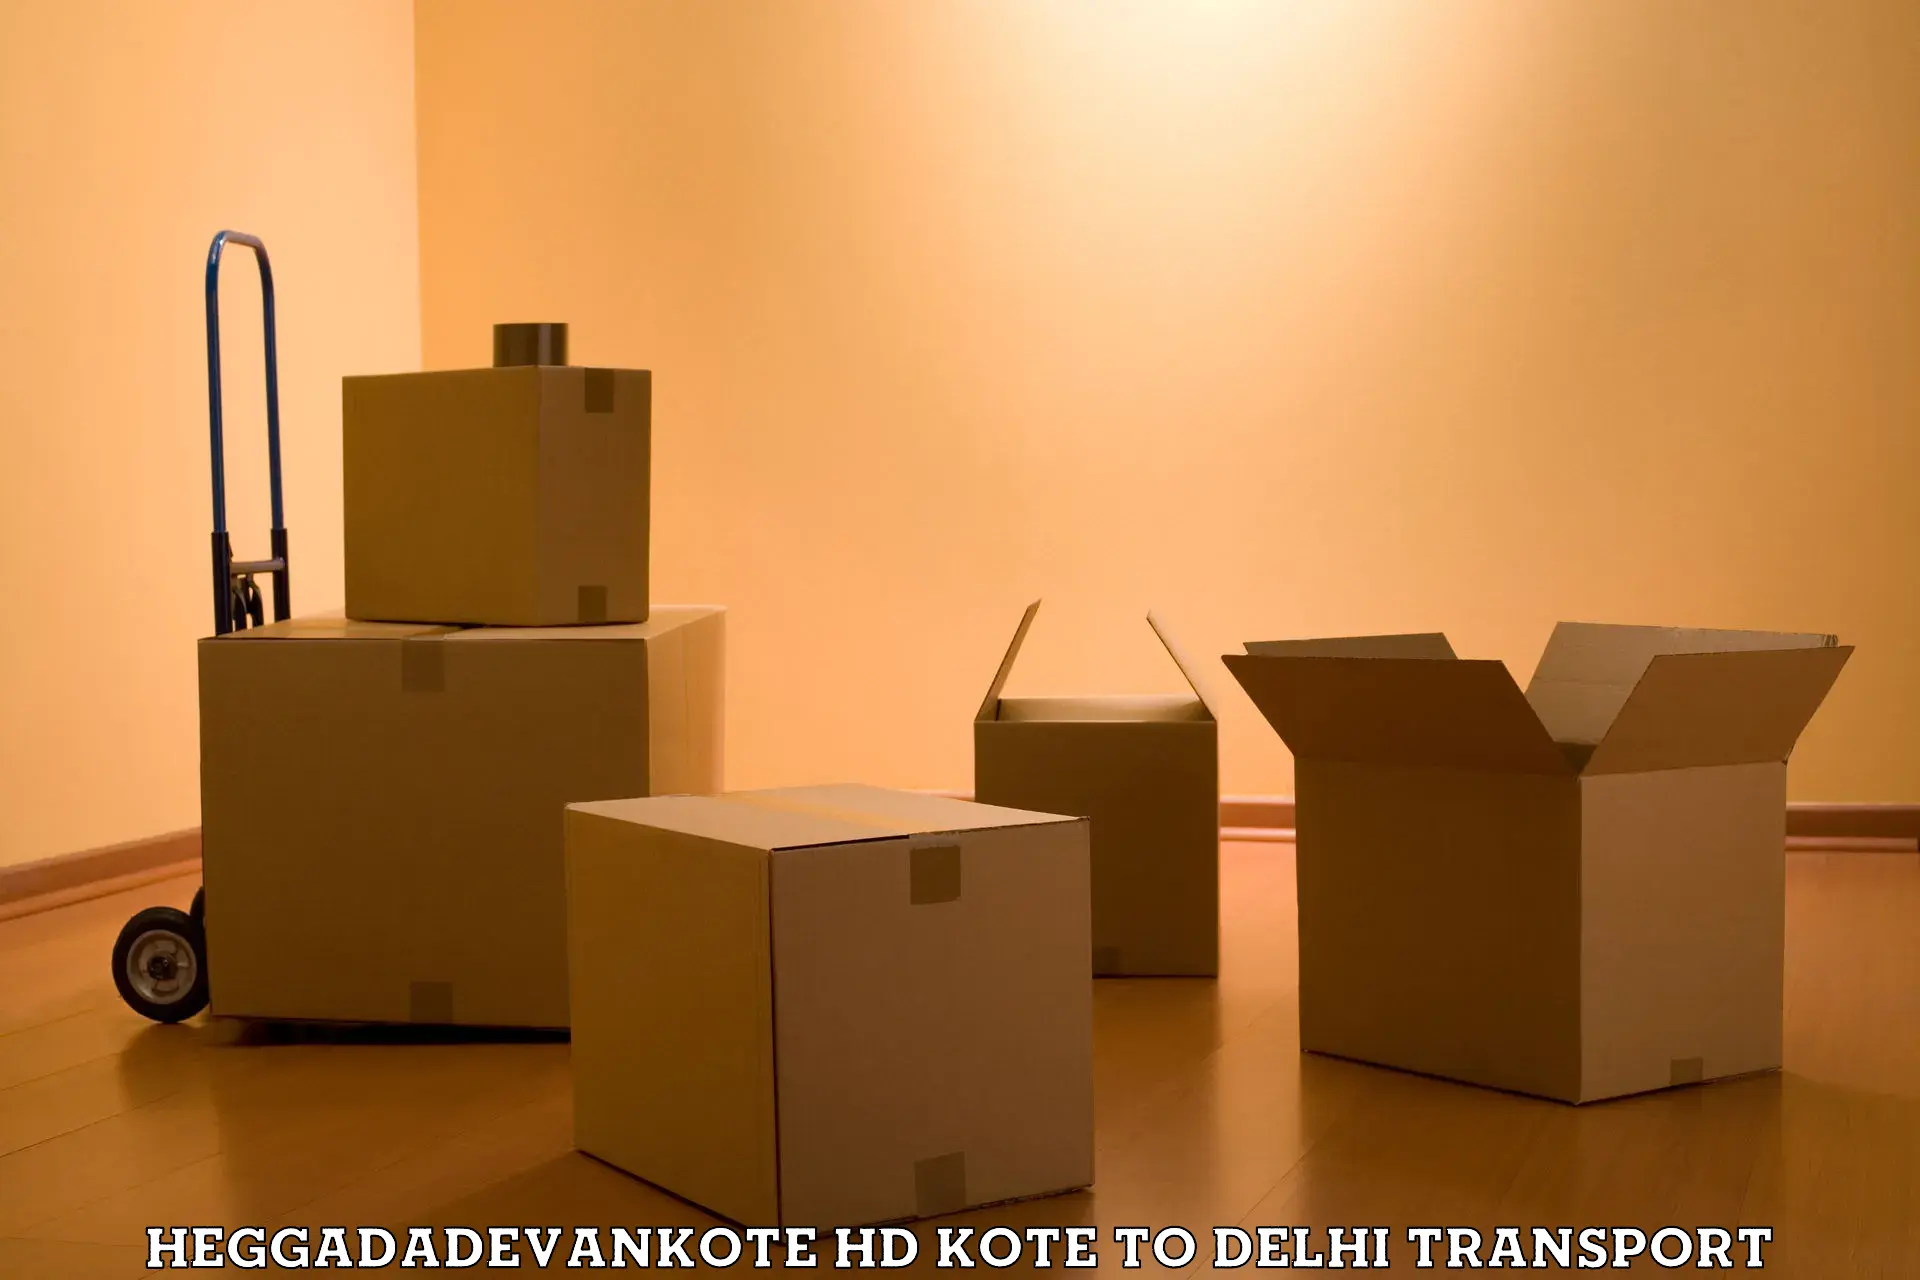 Transportation services Heggadadevankote HD Kote to University of Delhi